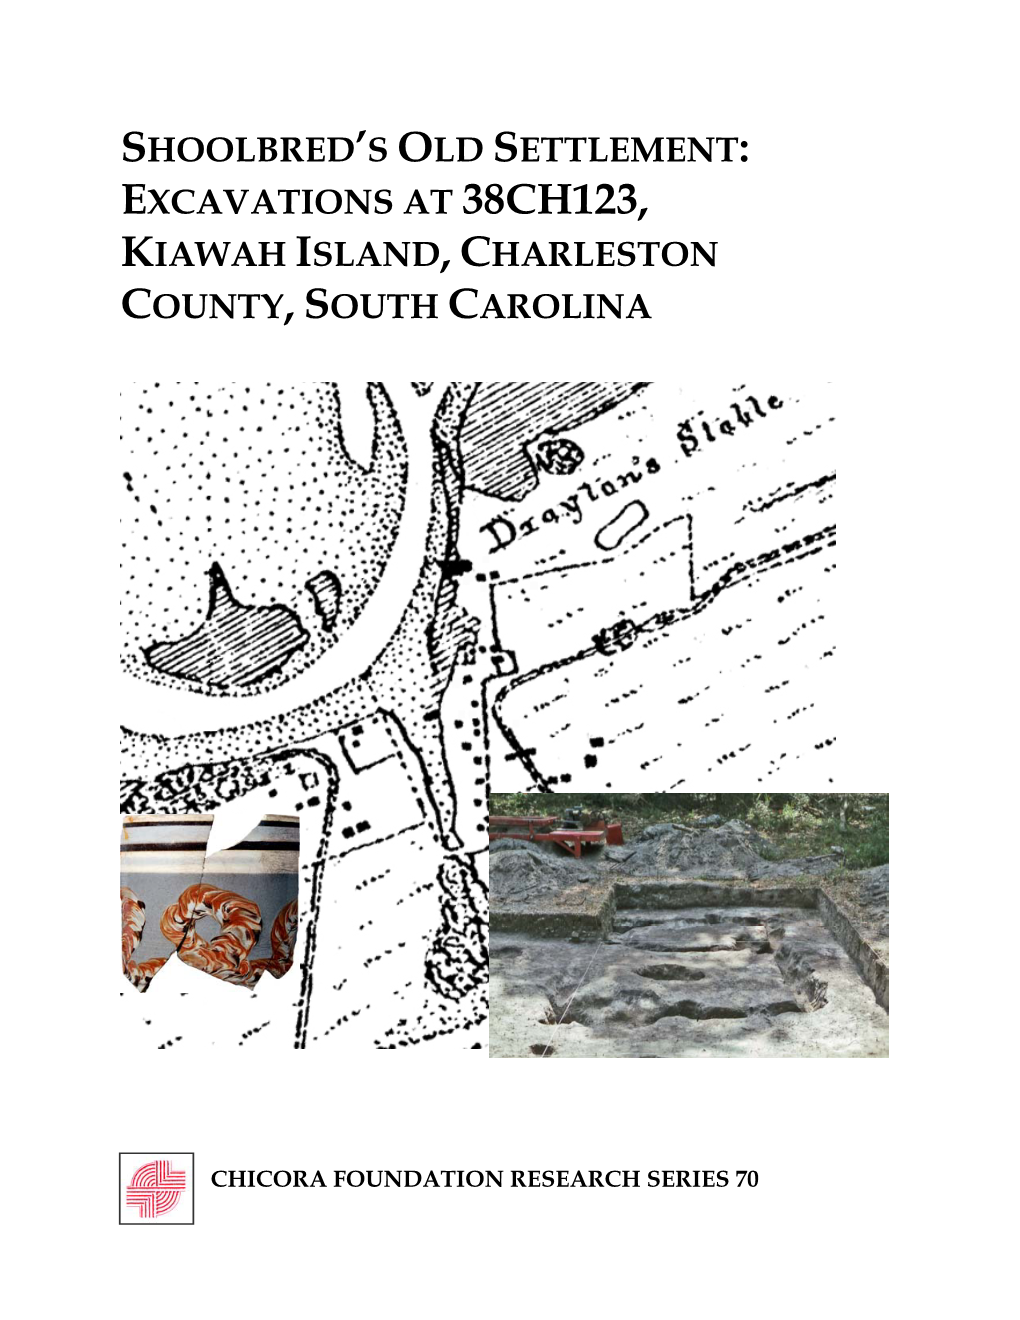 Excavations at 38Ch123, Kiawah Island, Charleston County, South Carolina